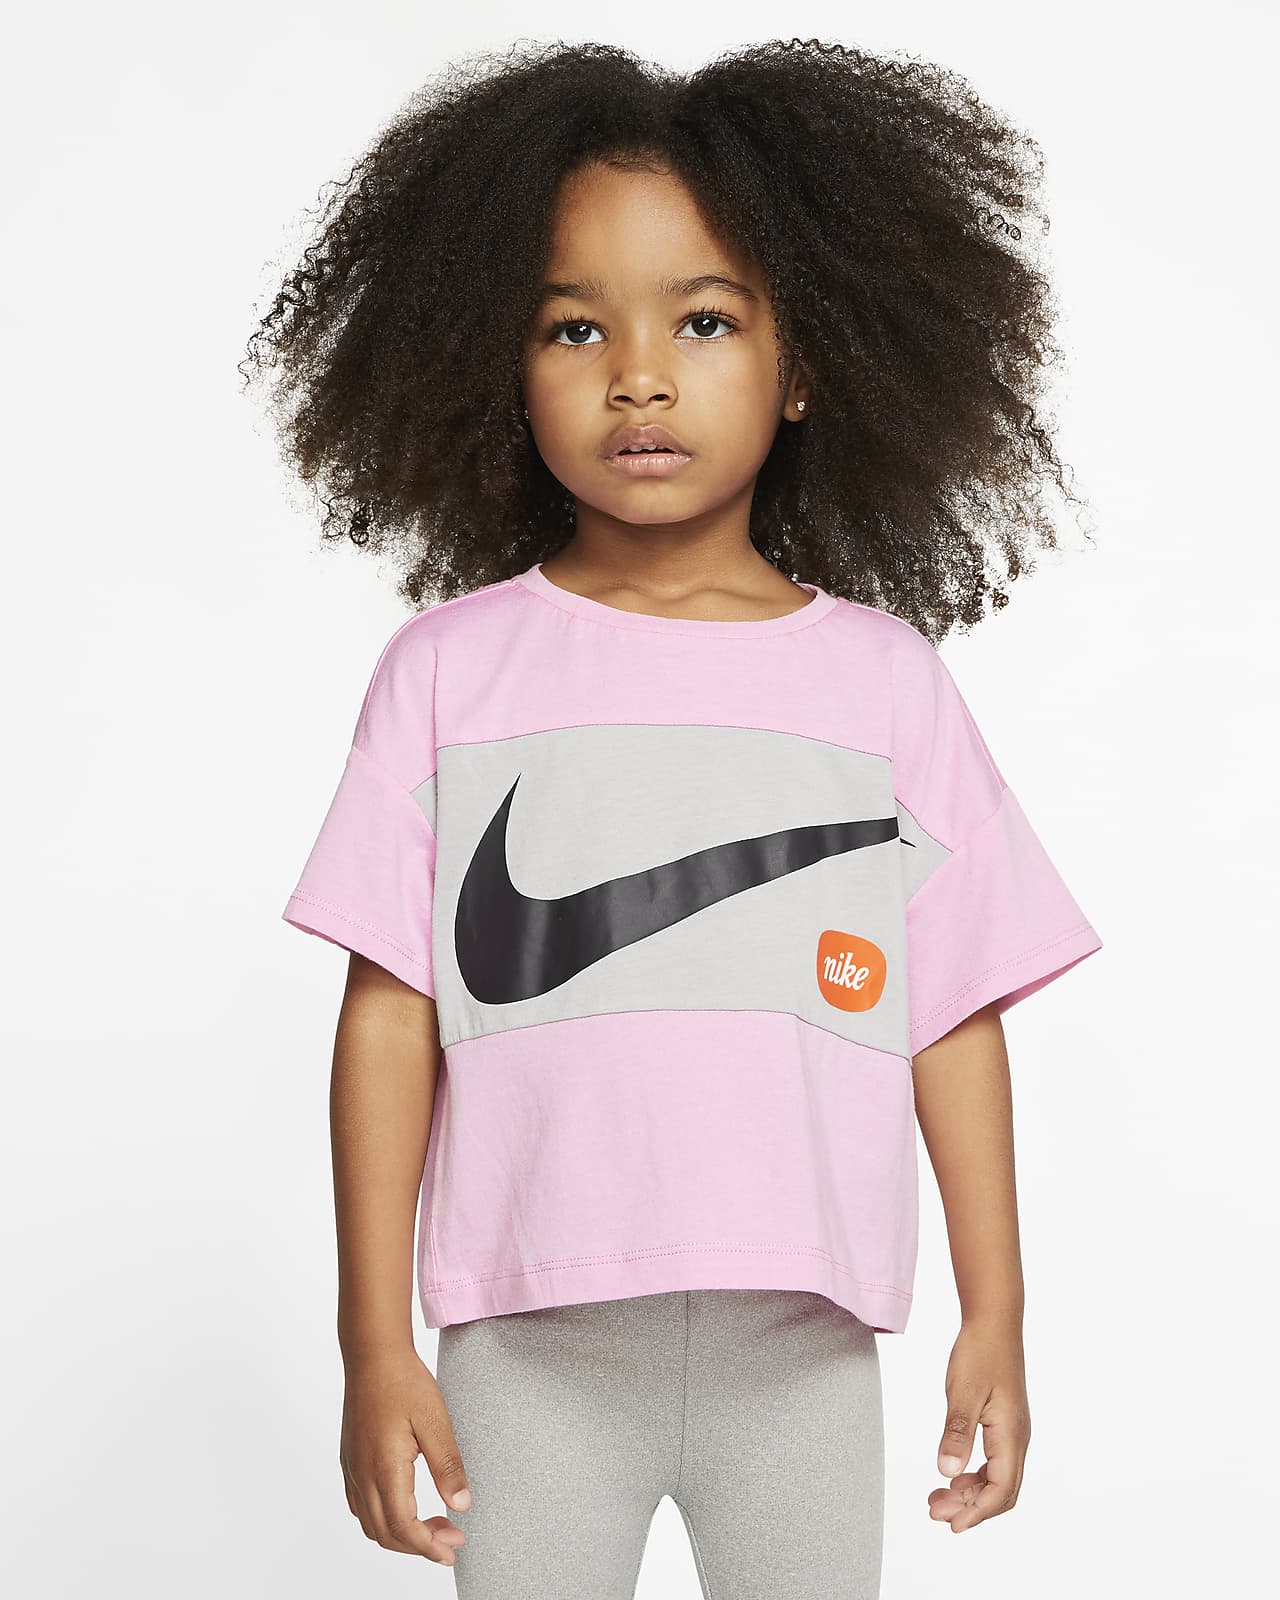 Nike Toddler Cropped Short-Sleeve Top. Nike.com